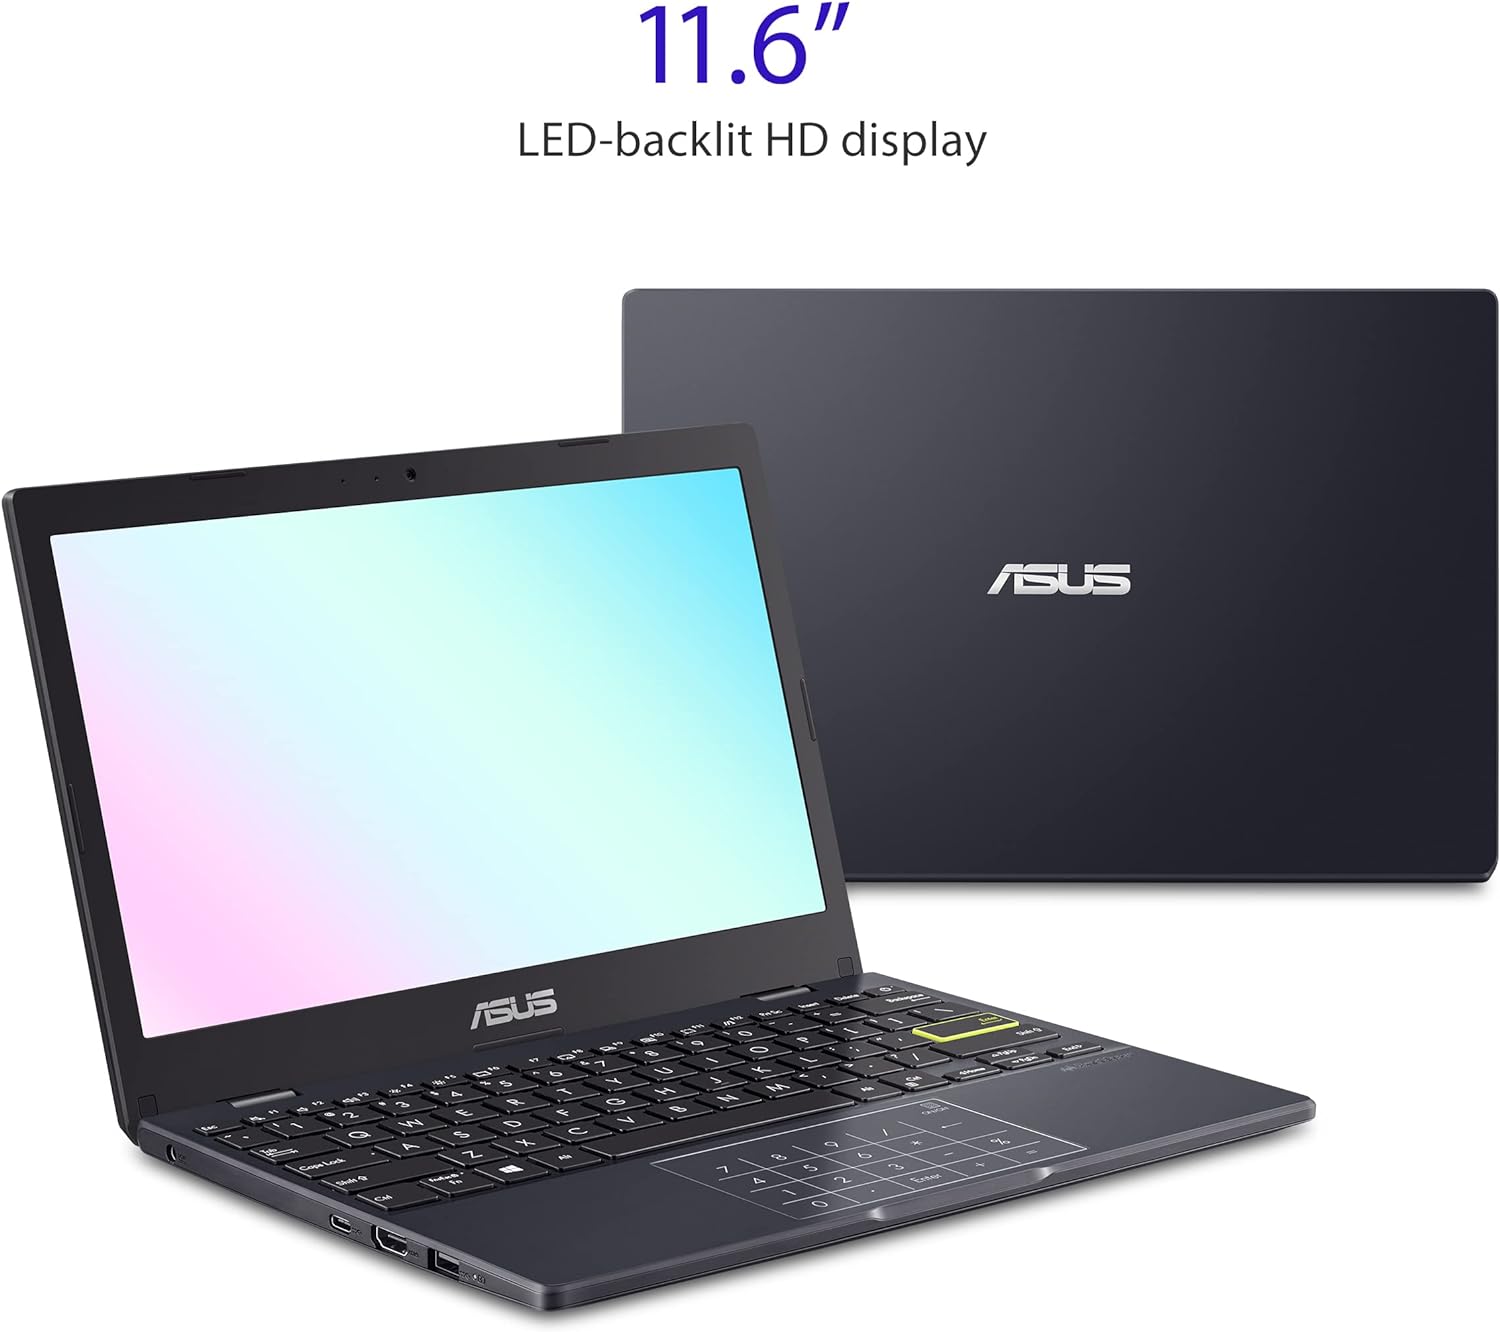 ASUS Vivobook Go 12 L210 116 UltraThin Laptop 2022 Ver - New Mexico - Albuquerque ID1520807 4